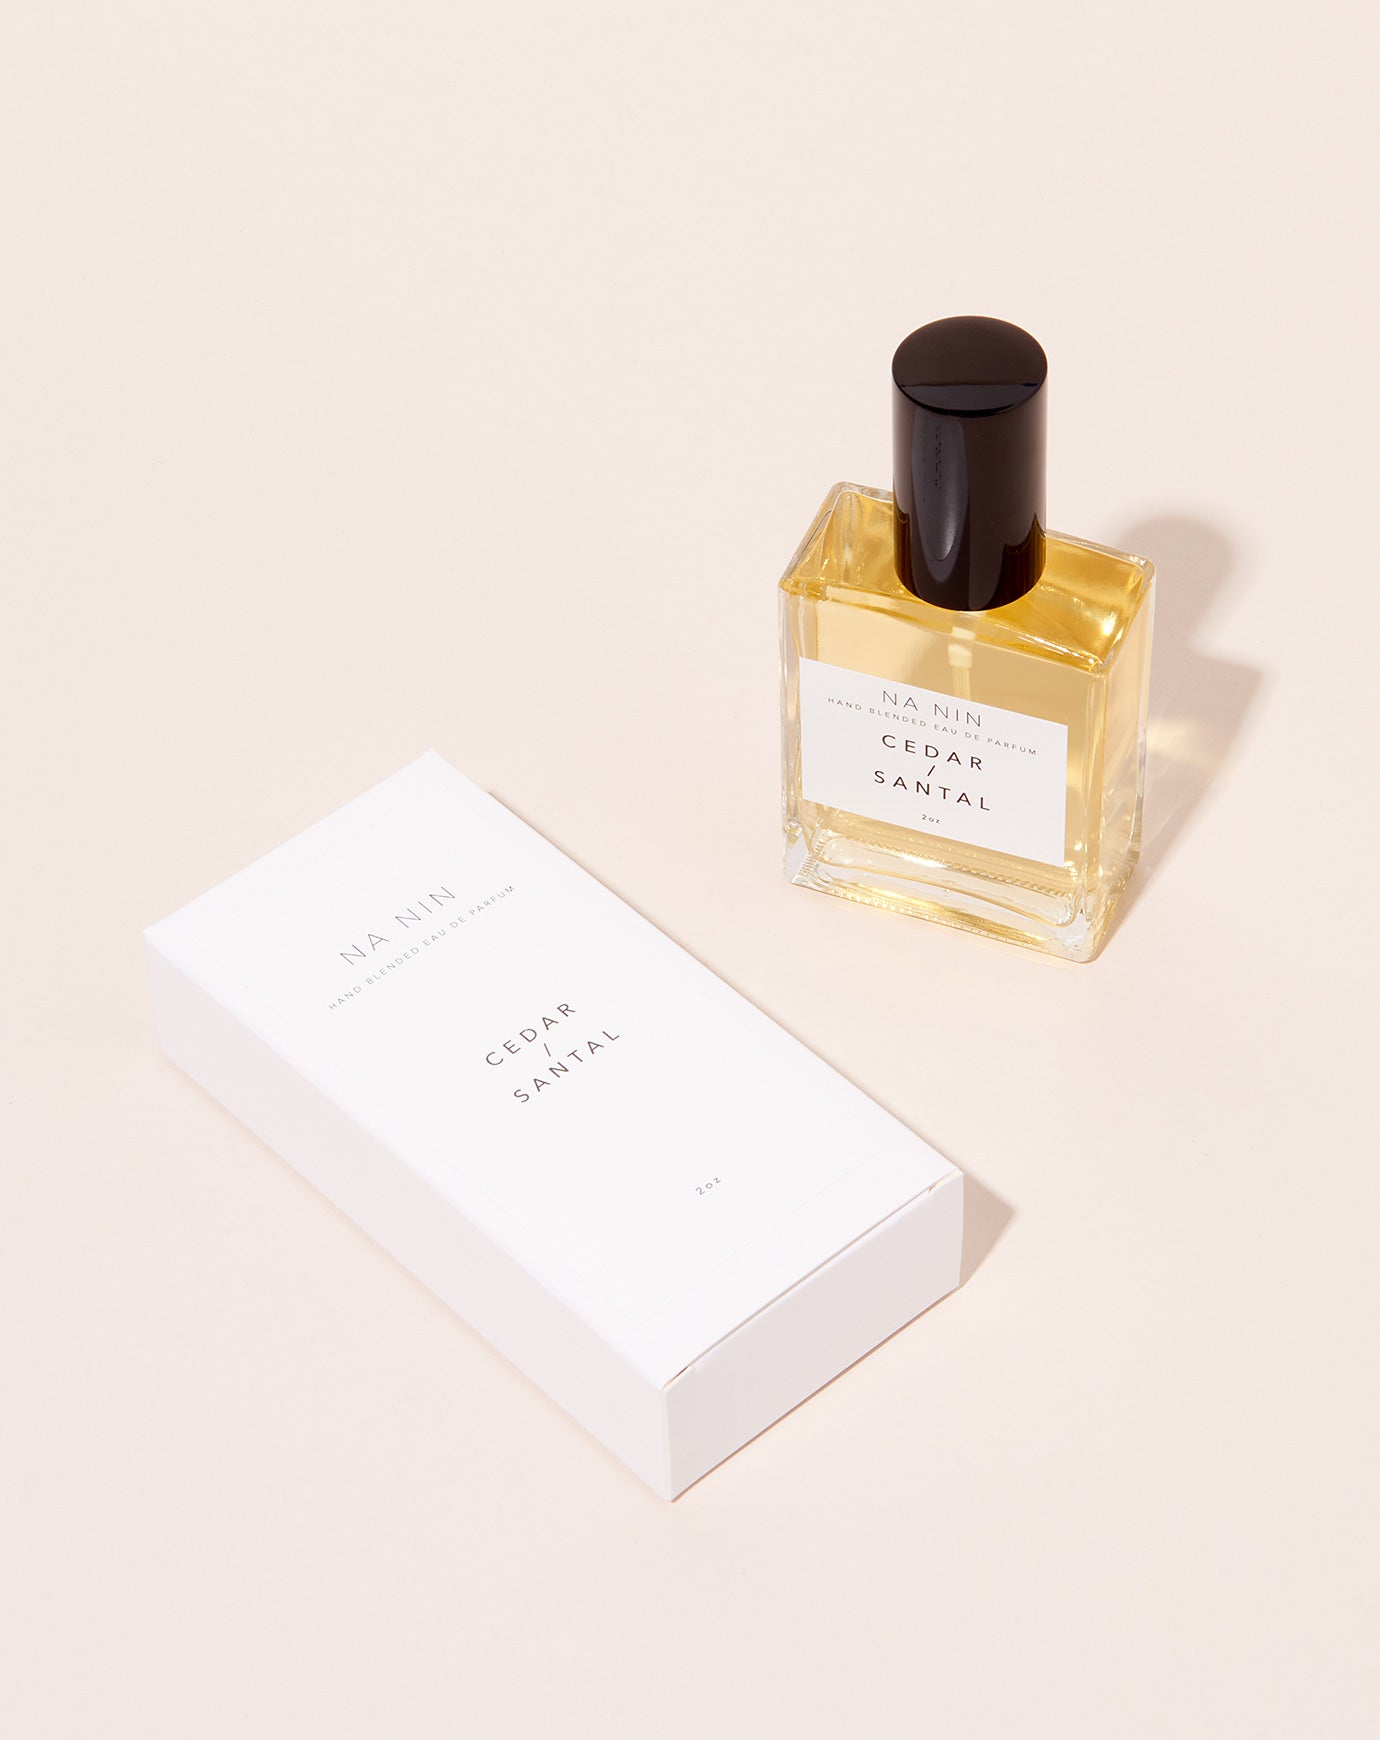 Na Nin Pairings Collection Eau de Parfum in Cedar / Santal